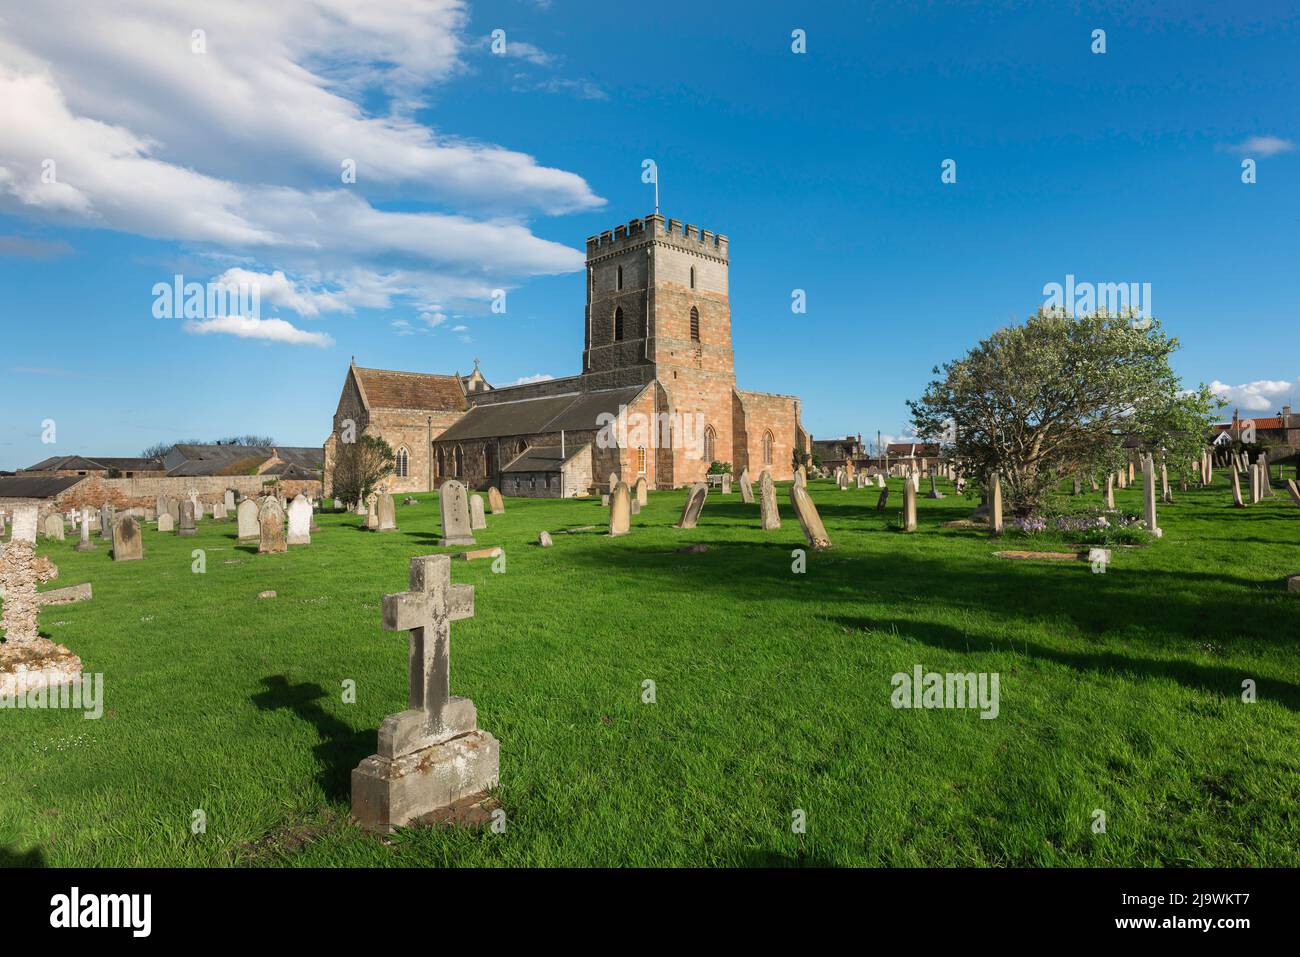 Bamburgh church, view of the 12th century St Aidan's Church and its scenic churchyard in the Northumberland coastal village of Bamburgh, England, UK Stock Photo